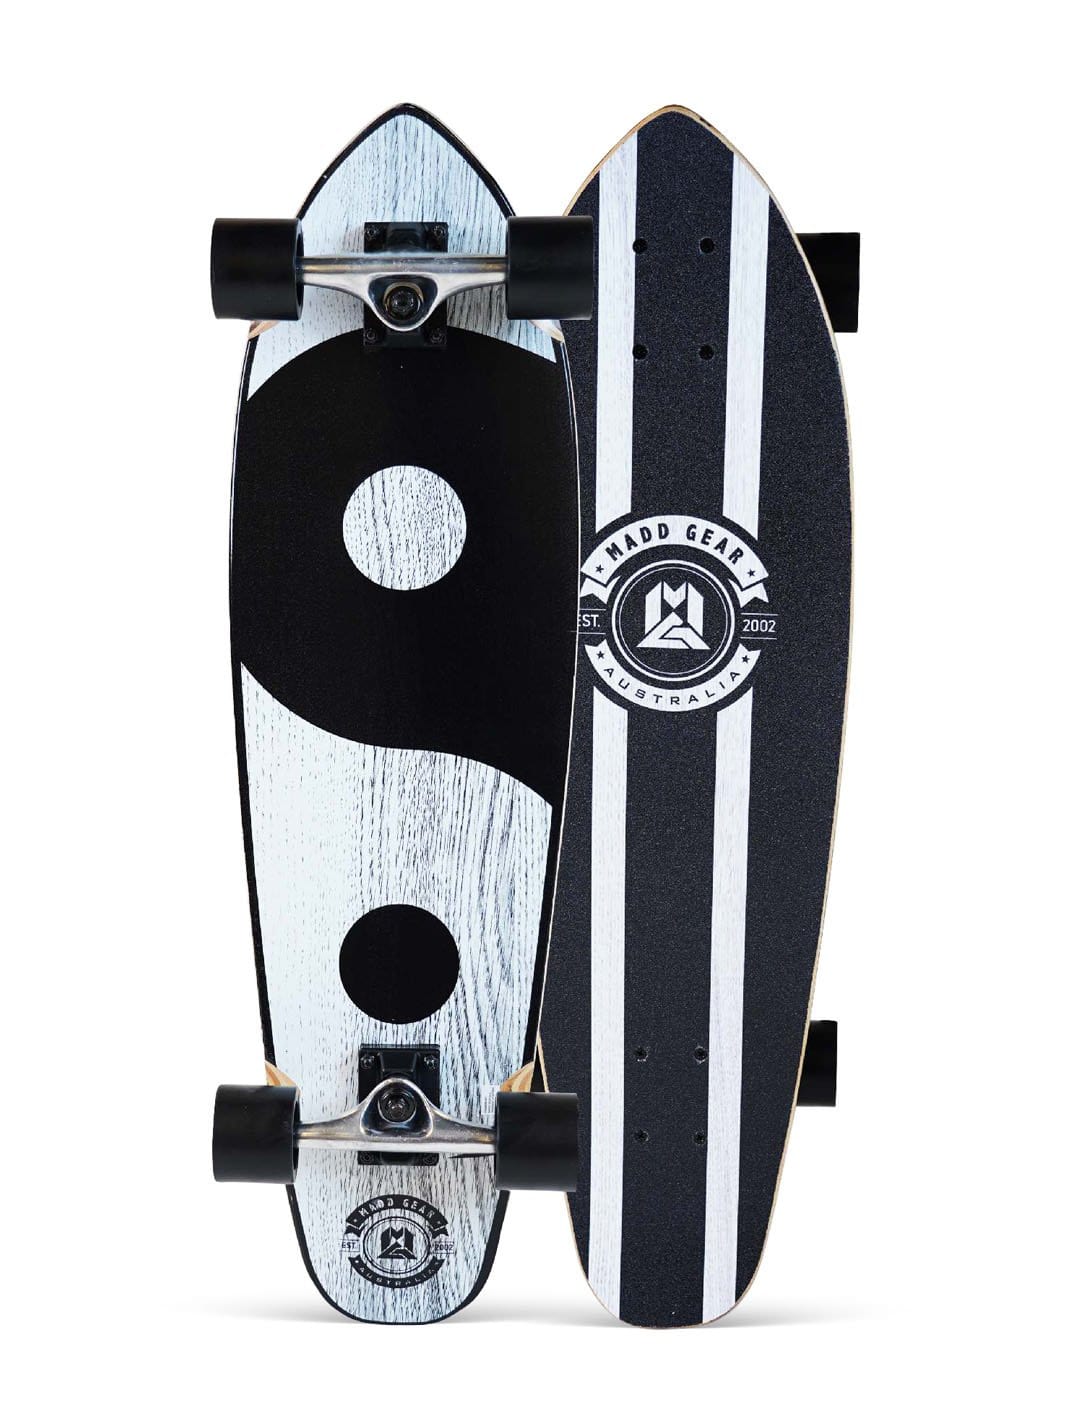 Madd Gear 32" Cruiser Board Skateboard Maple Kids Children's High Quality Aluminum Trucks Black White